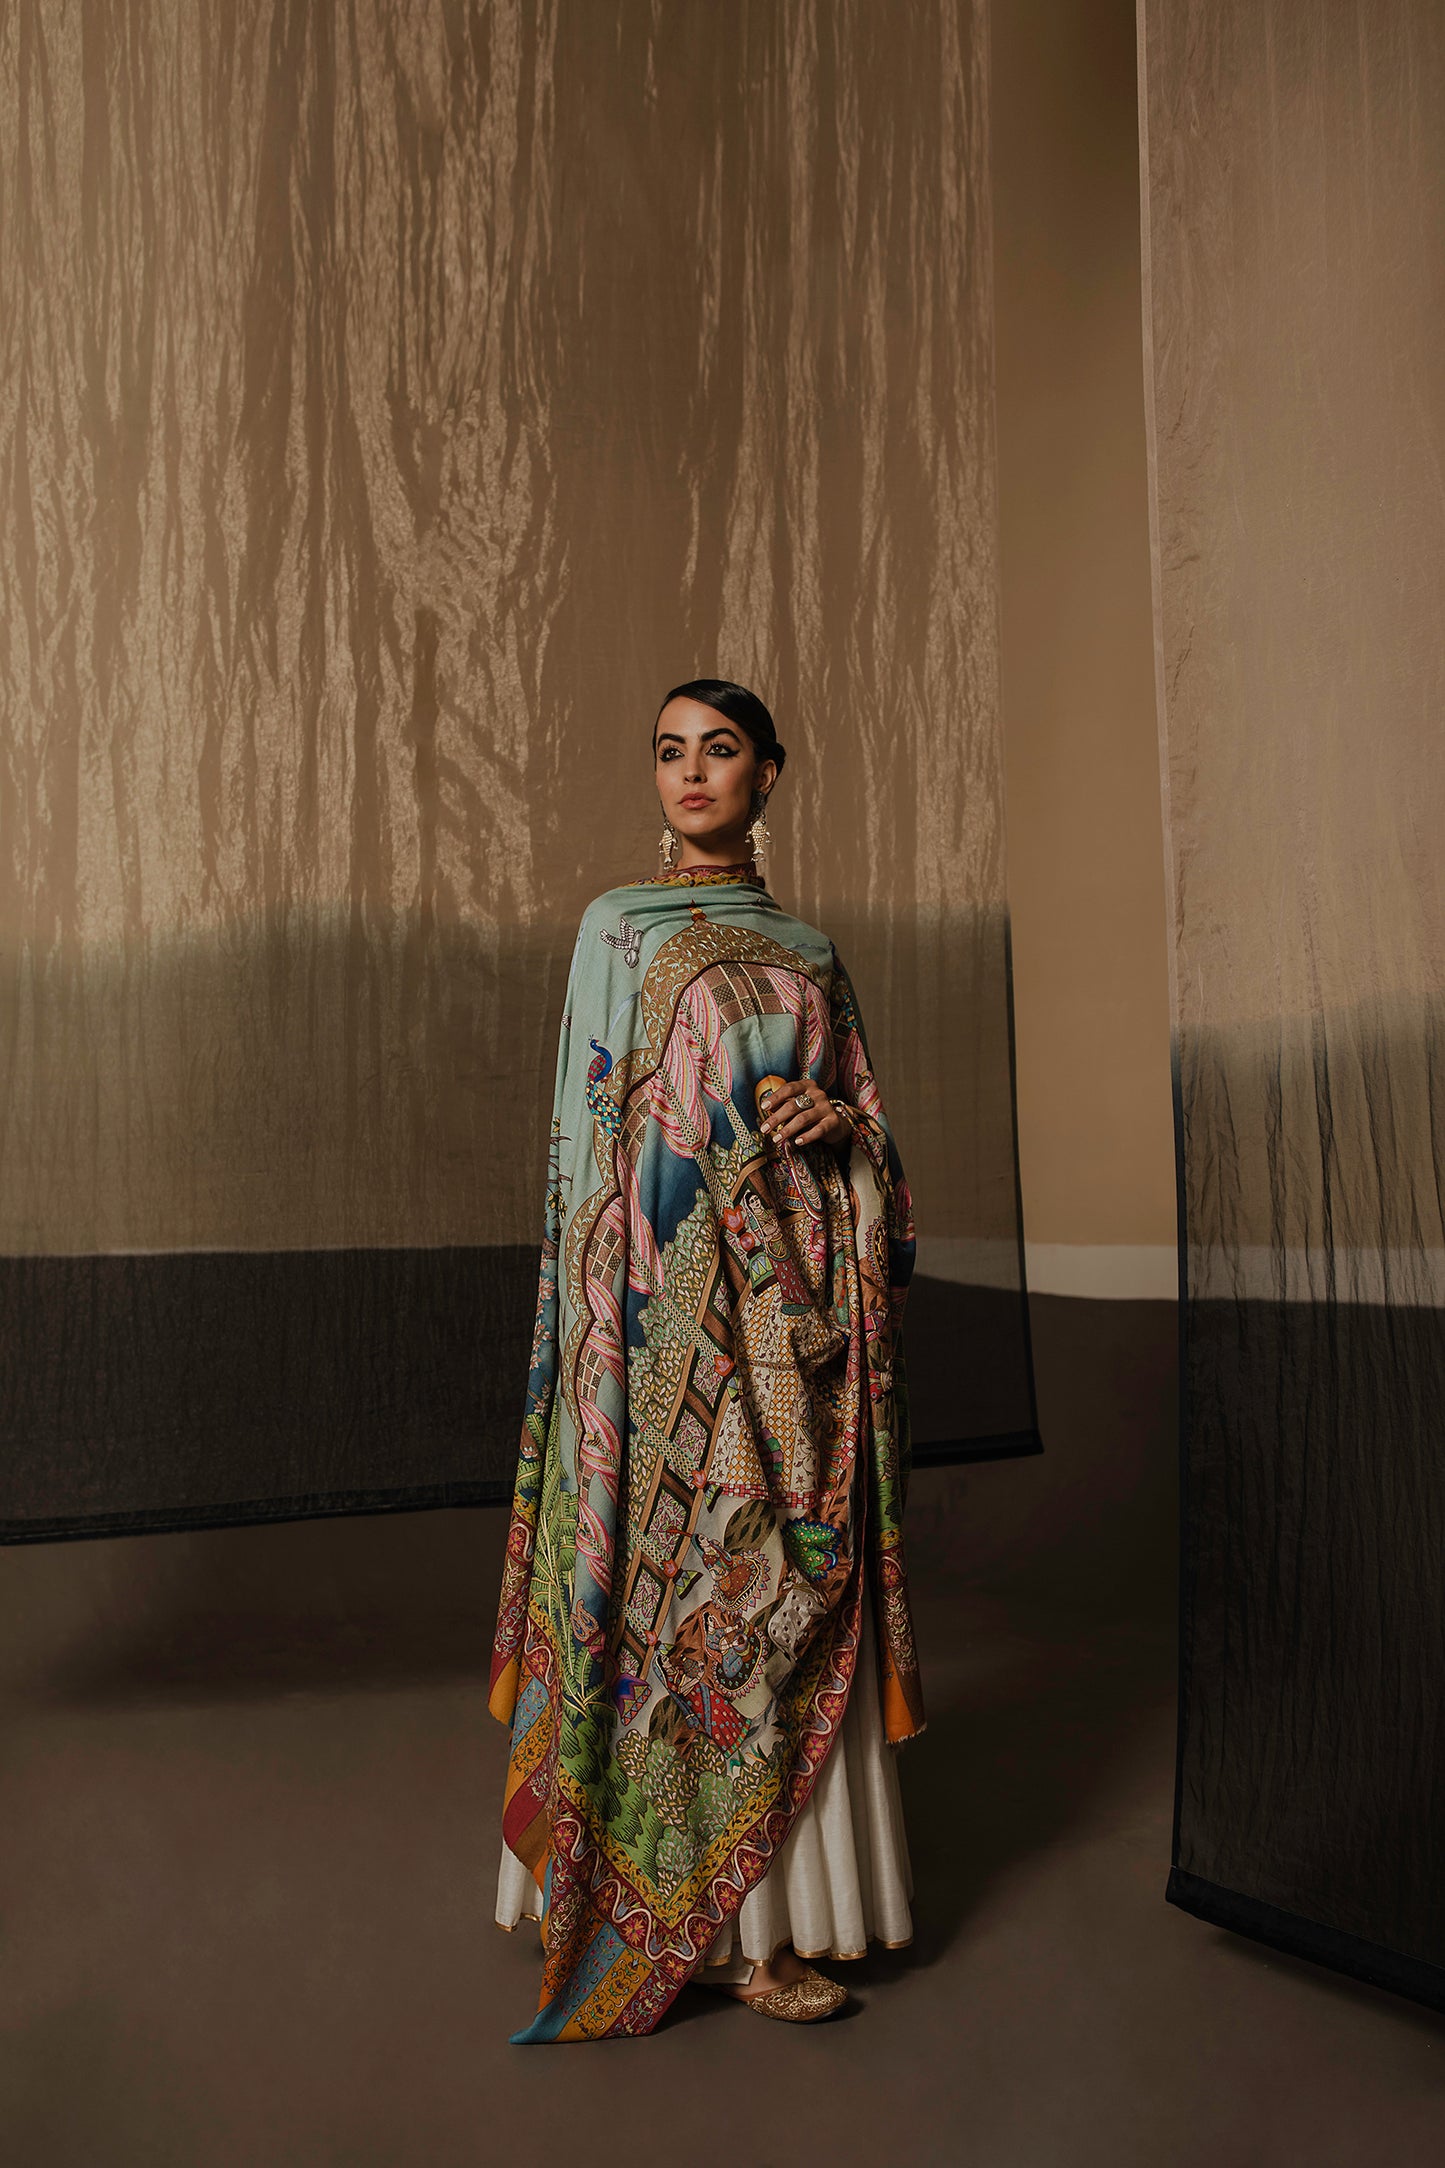 Model is wearing the Shree Nath ji Pashmina shawl from Shaza.